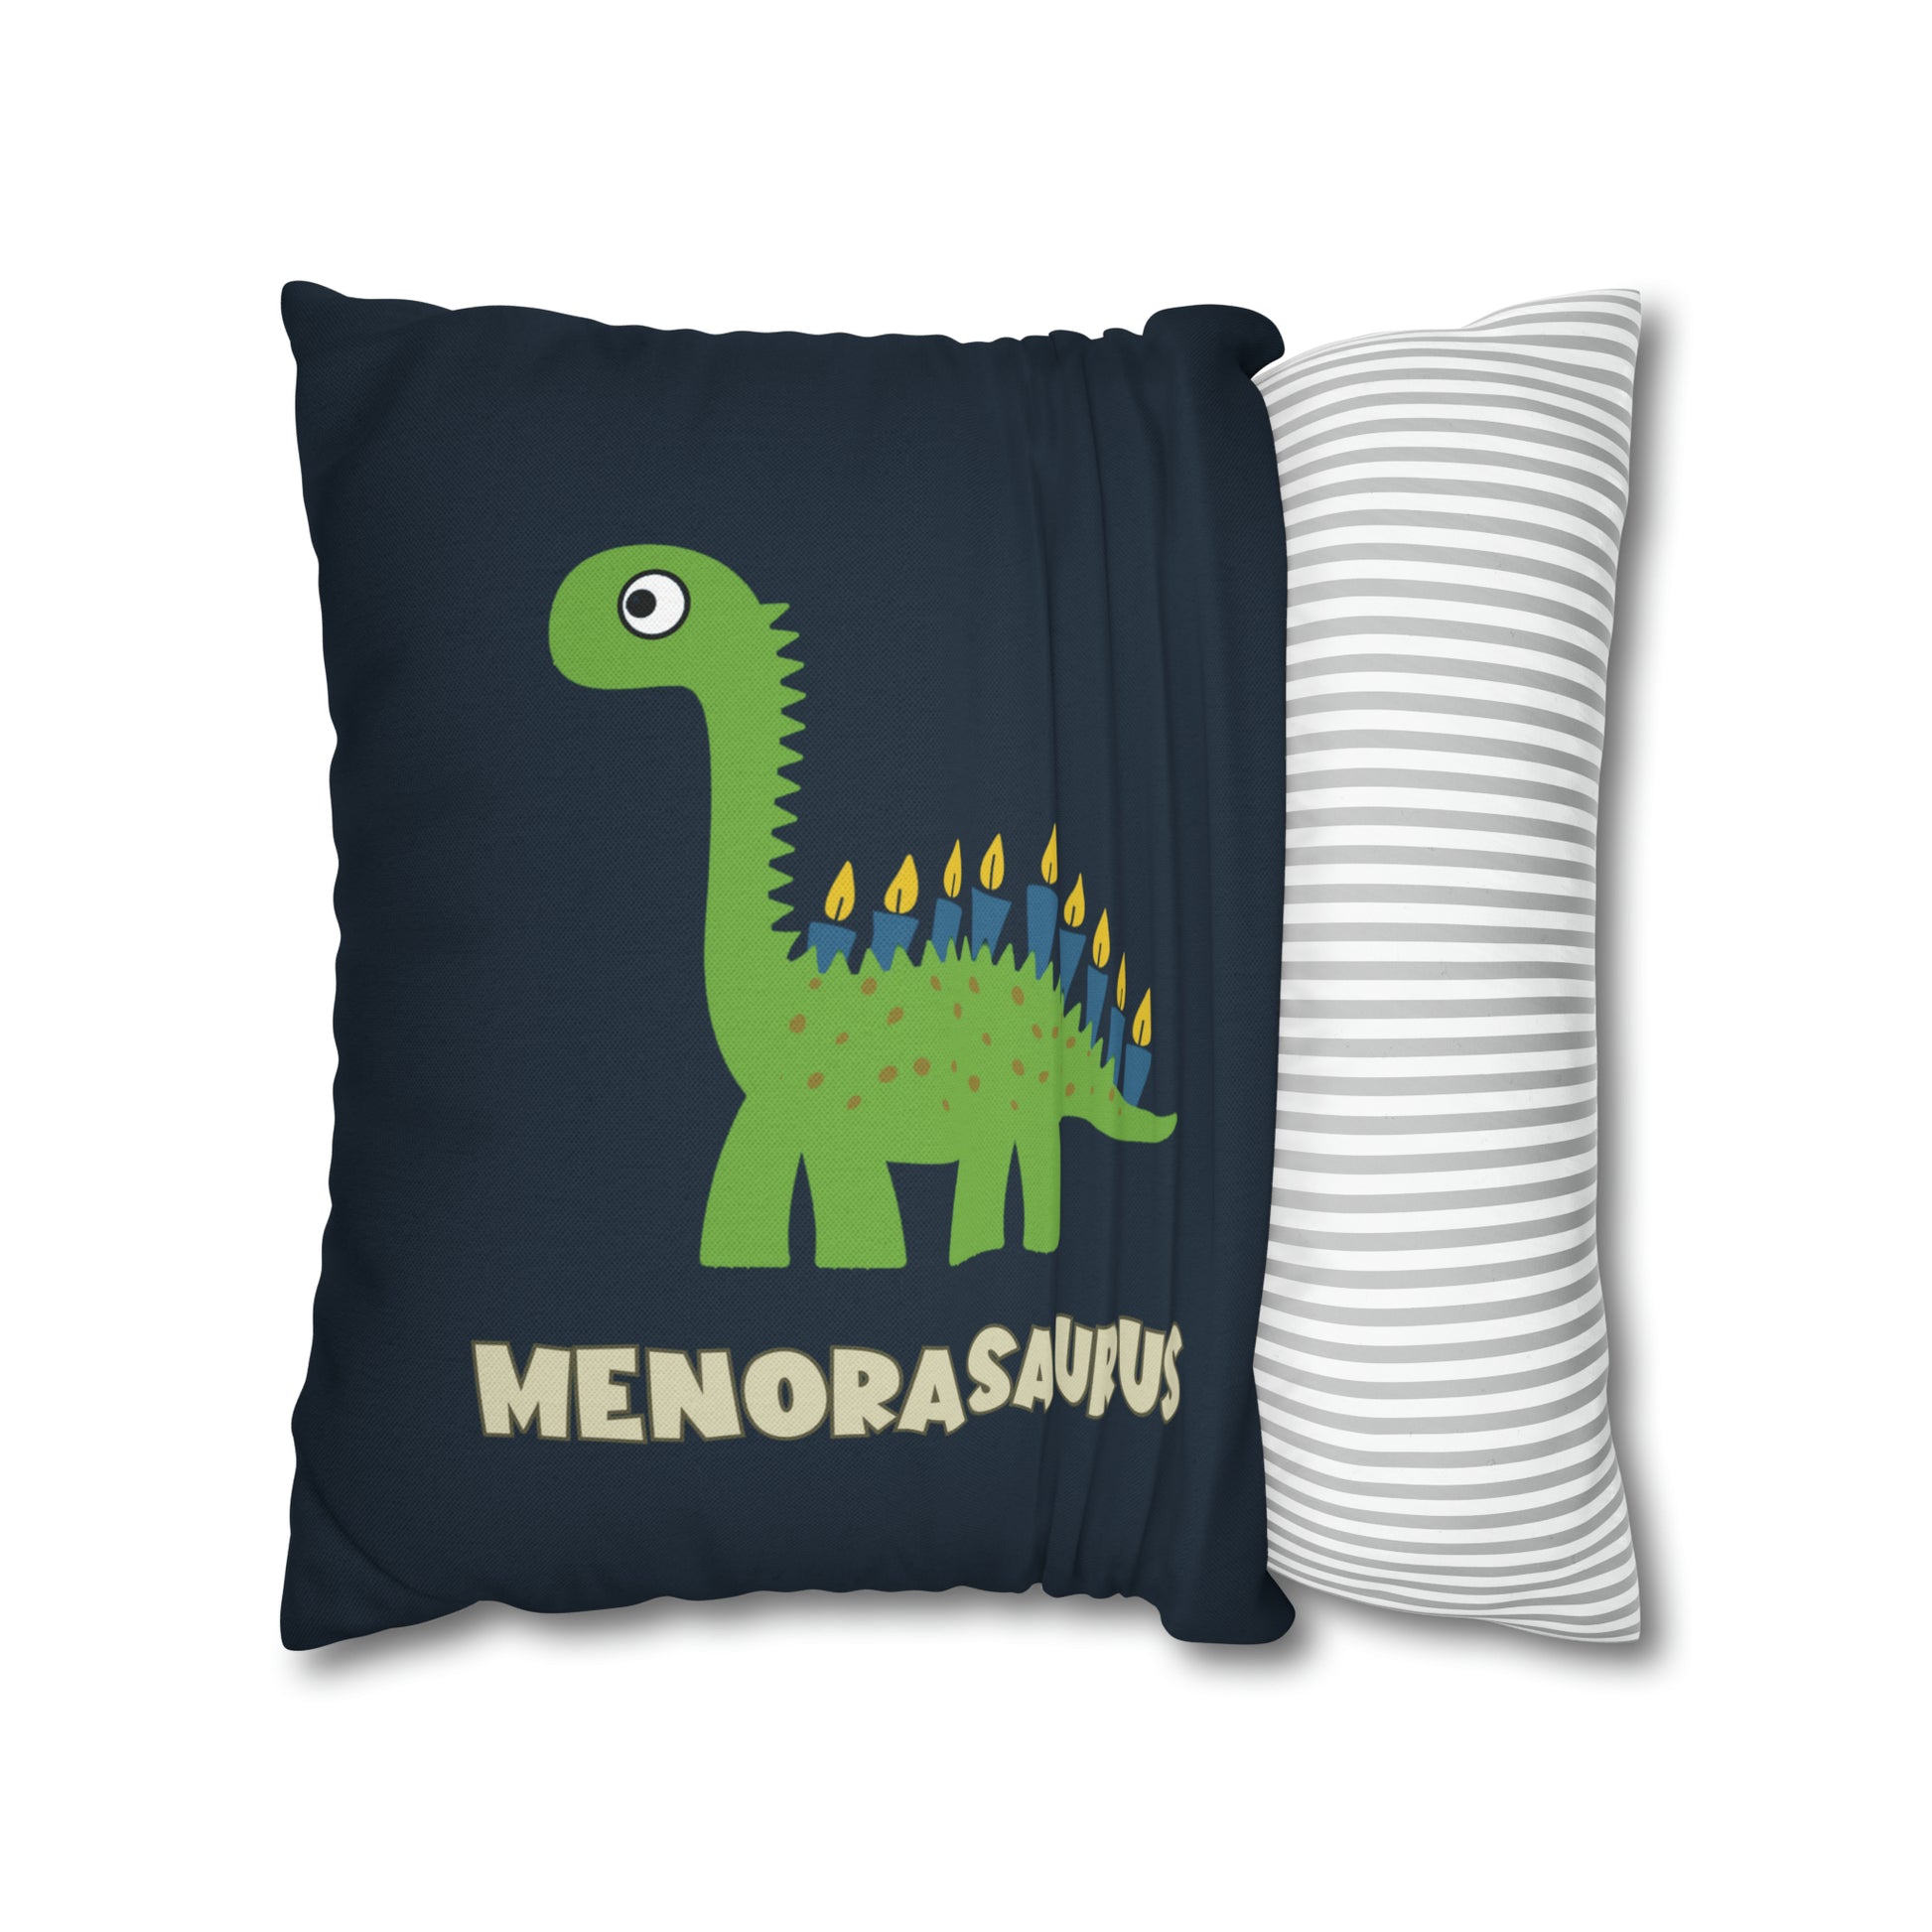 menorasaurus hanukkah kids throw pillow cover 